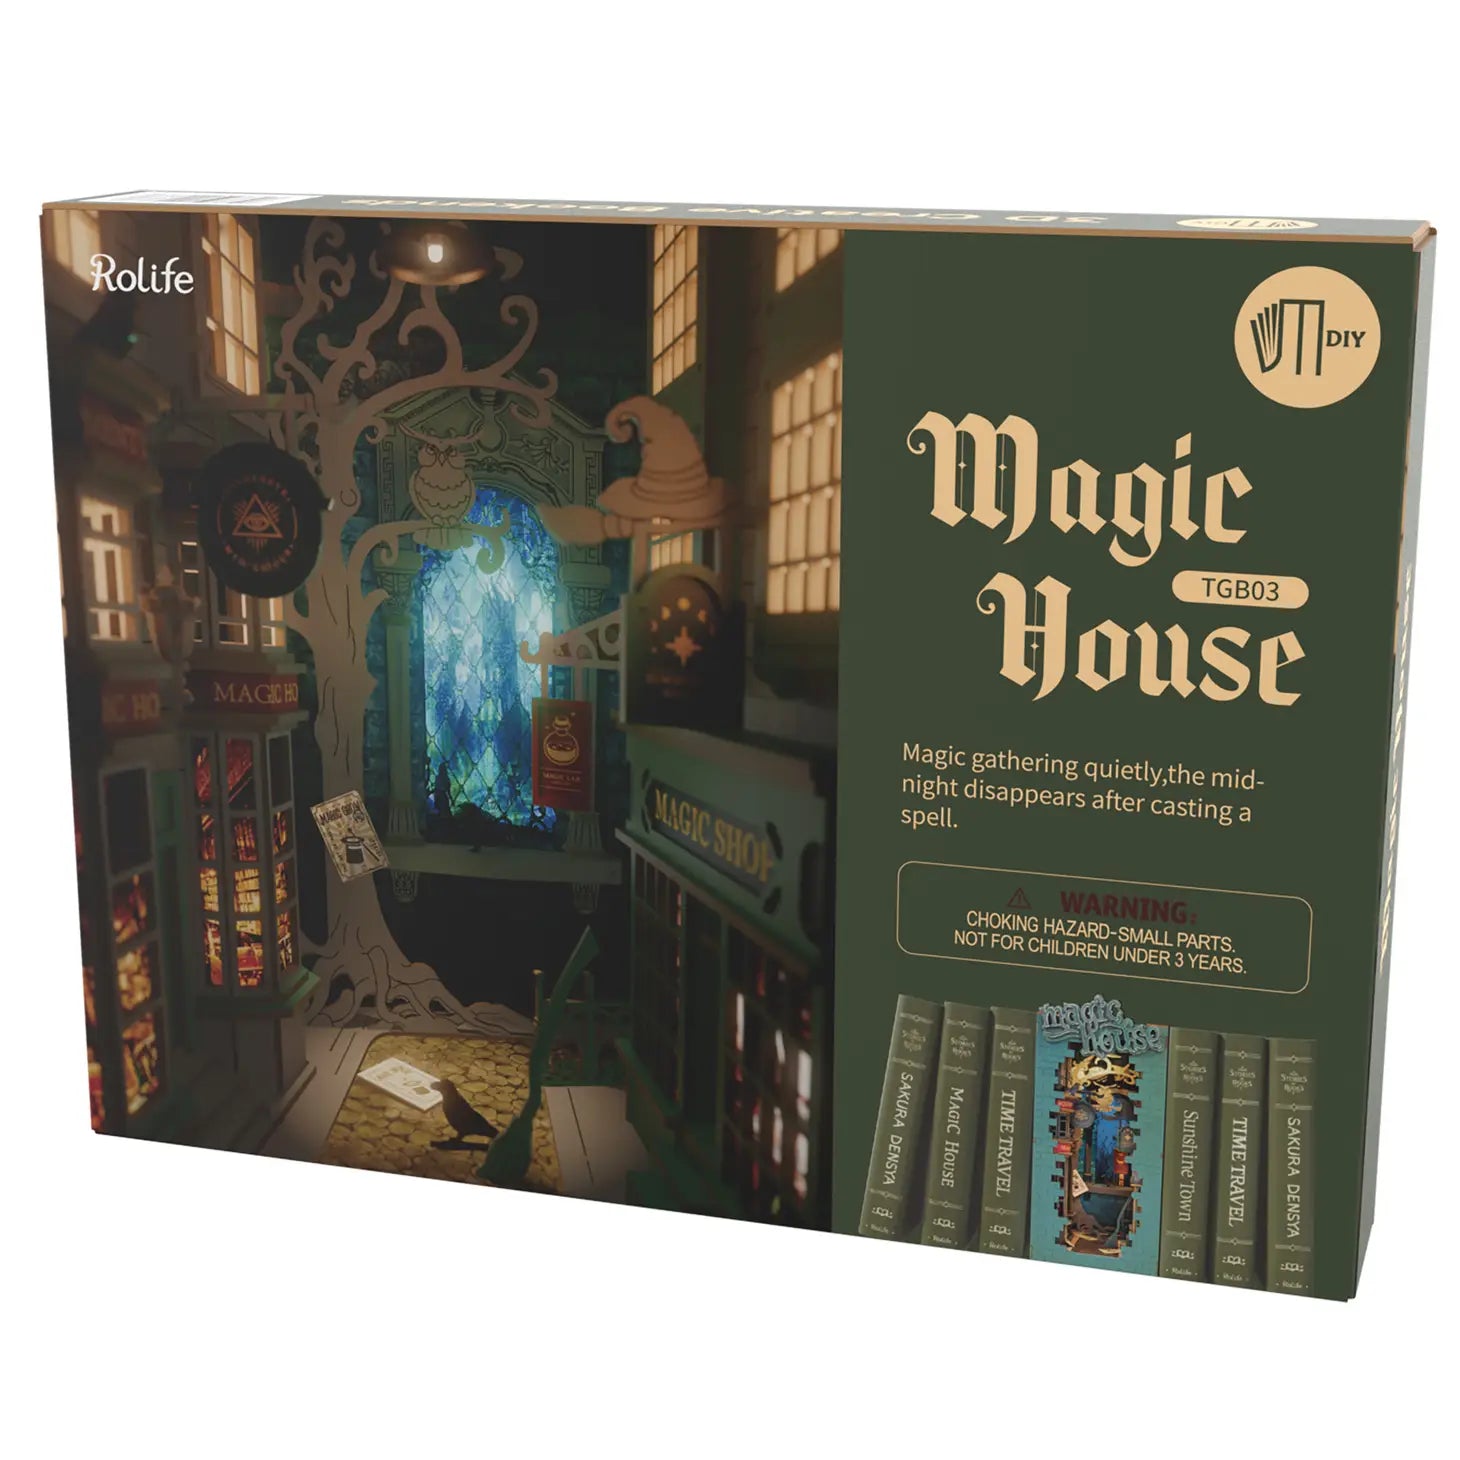 DIY Miniature House Book Nook Kit: Sunshine Town – Jedidiah Design Store